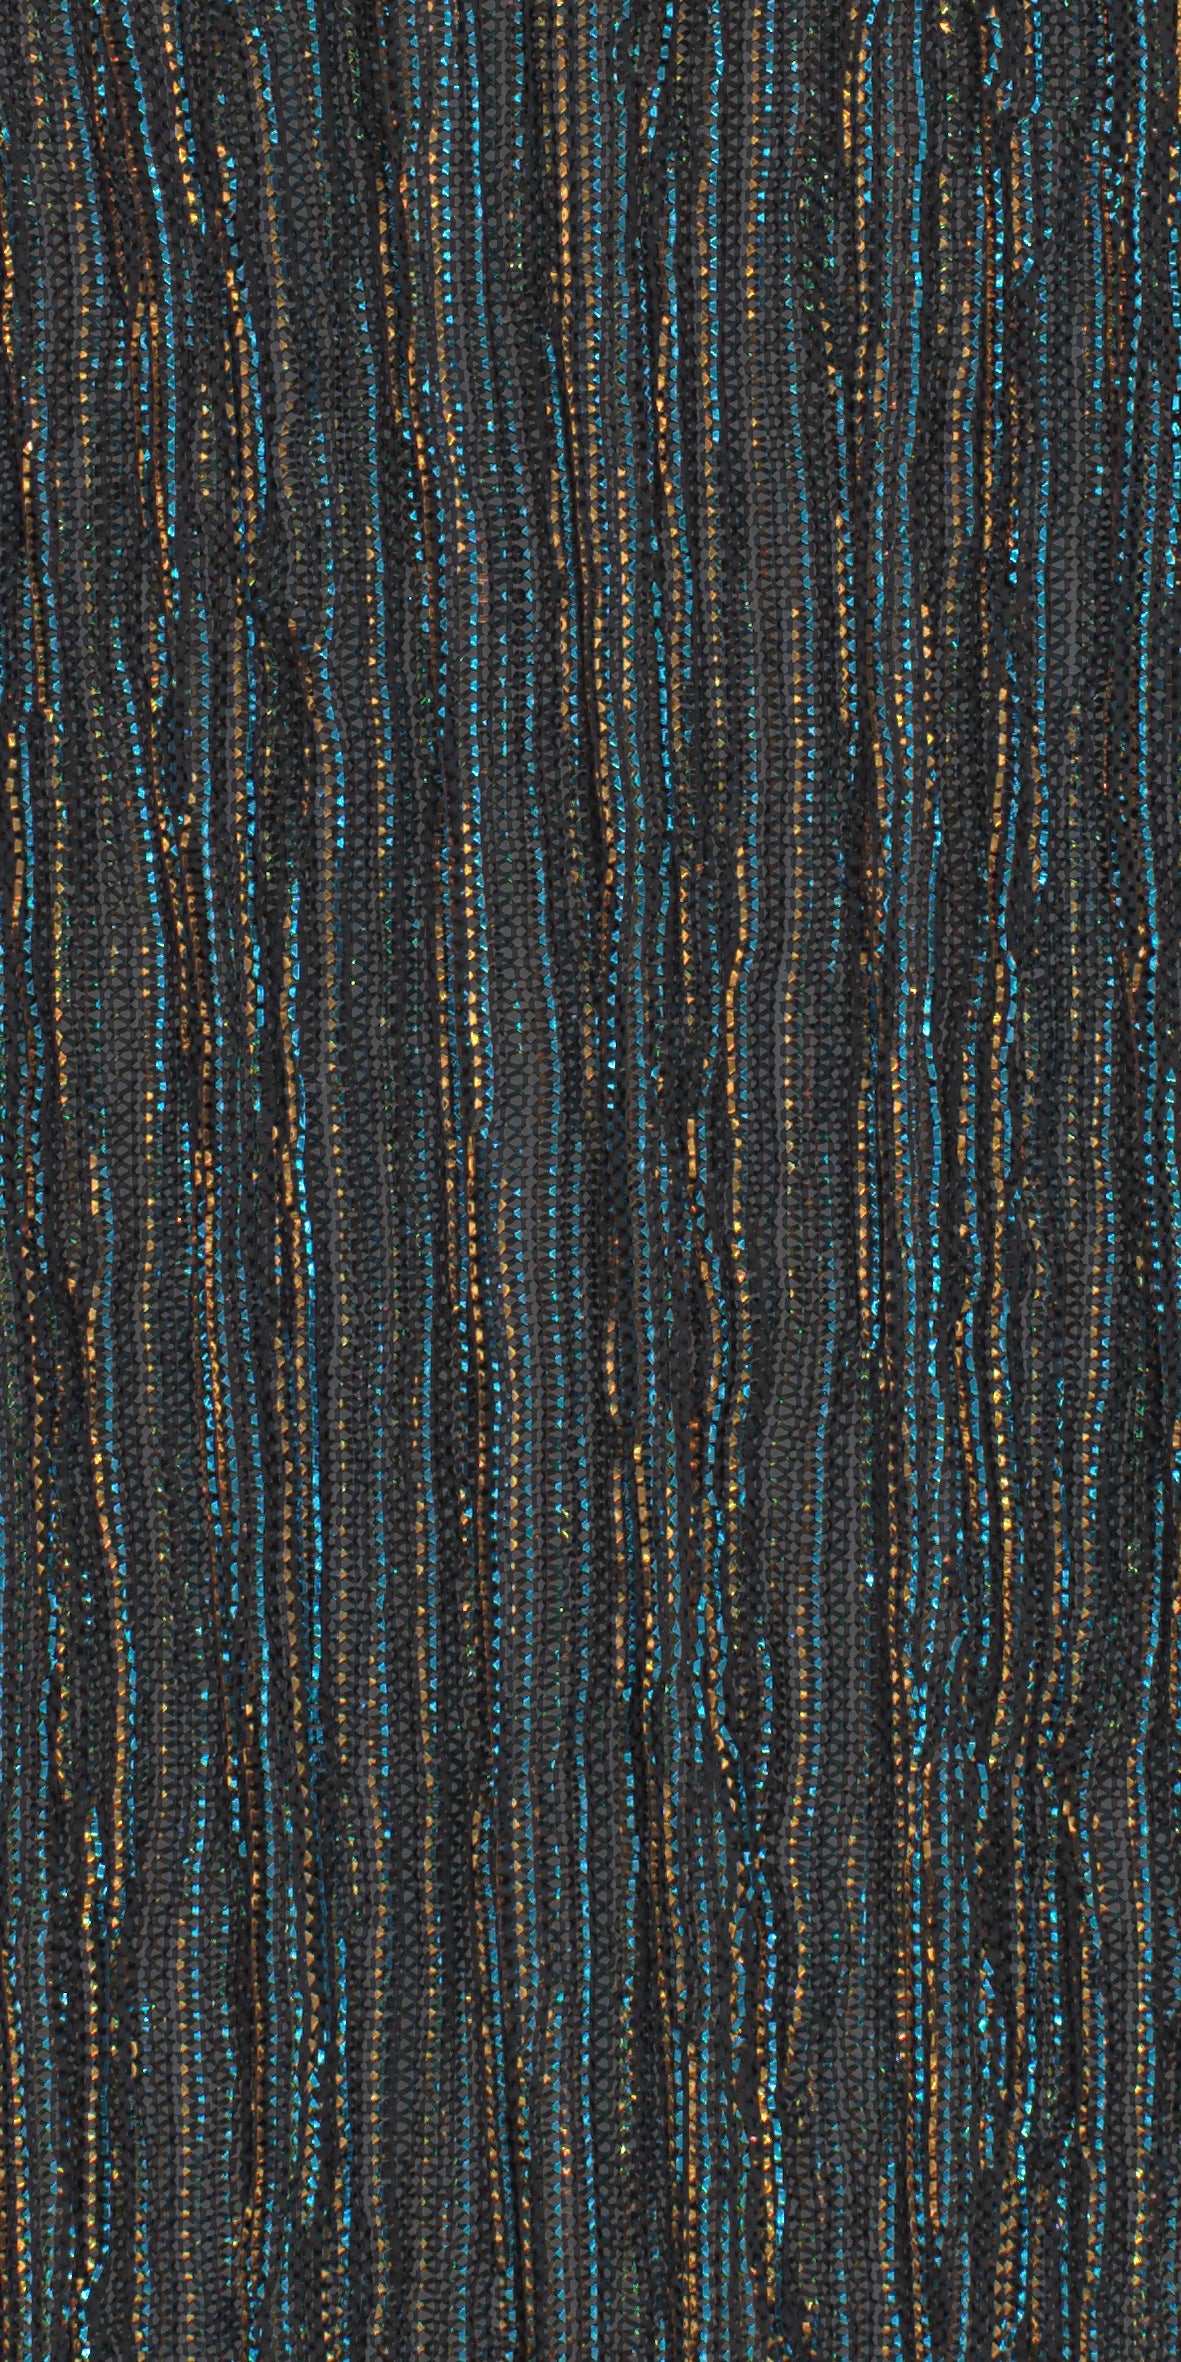 12006-21 Black Green Gold Metallic Pleat Plain Dyed Blend 126g/yd 56&quot; black blend gold green knit metallic plain dyed pleat ppl new Metallic, Pleat - knit fabric - woven fabric - fabric company - fabric wholesale - fabric b2b - fabric factory - high quality fabric - hong kong fabric - fabric hk - acetate fabric - cotton fabric - linen fabric - metallic fabric - nylon fabric - polyester fabric - spandex fabric - chun wing hing - cwh hk - fabric worldwide ship - 針織布 - 梳織布 - 布料公司- 布料批發 - 香港布料 - 秦榮興